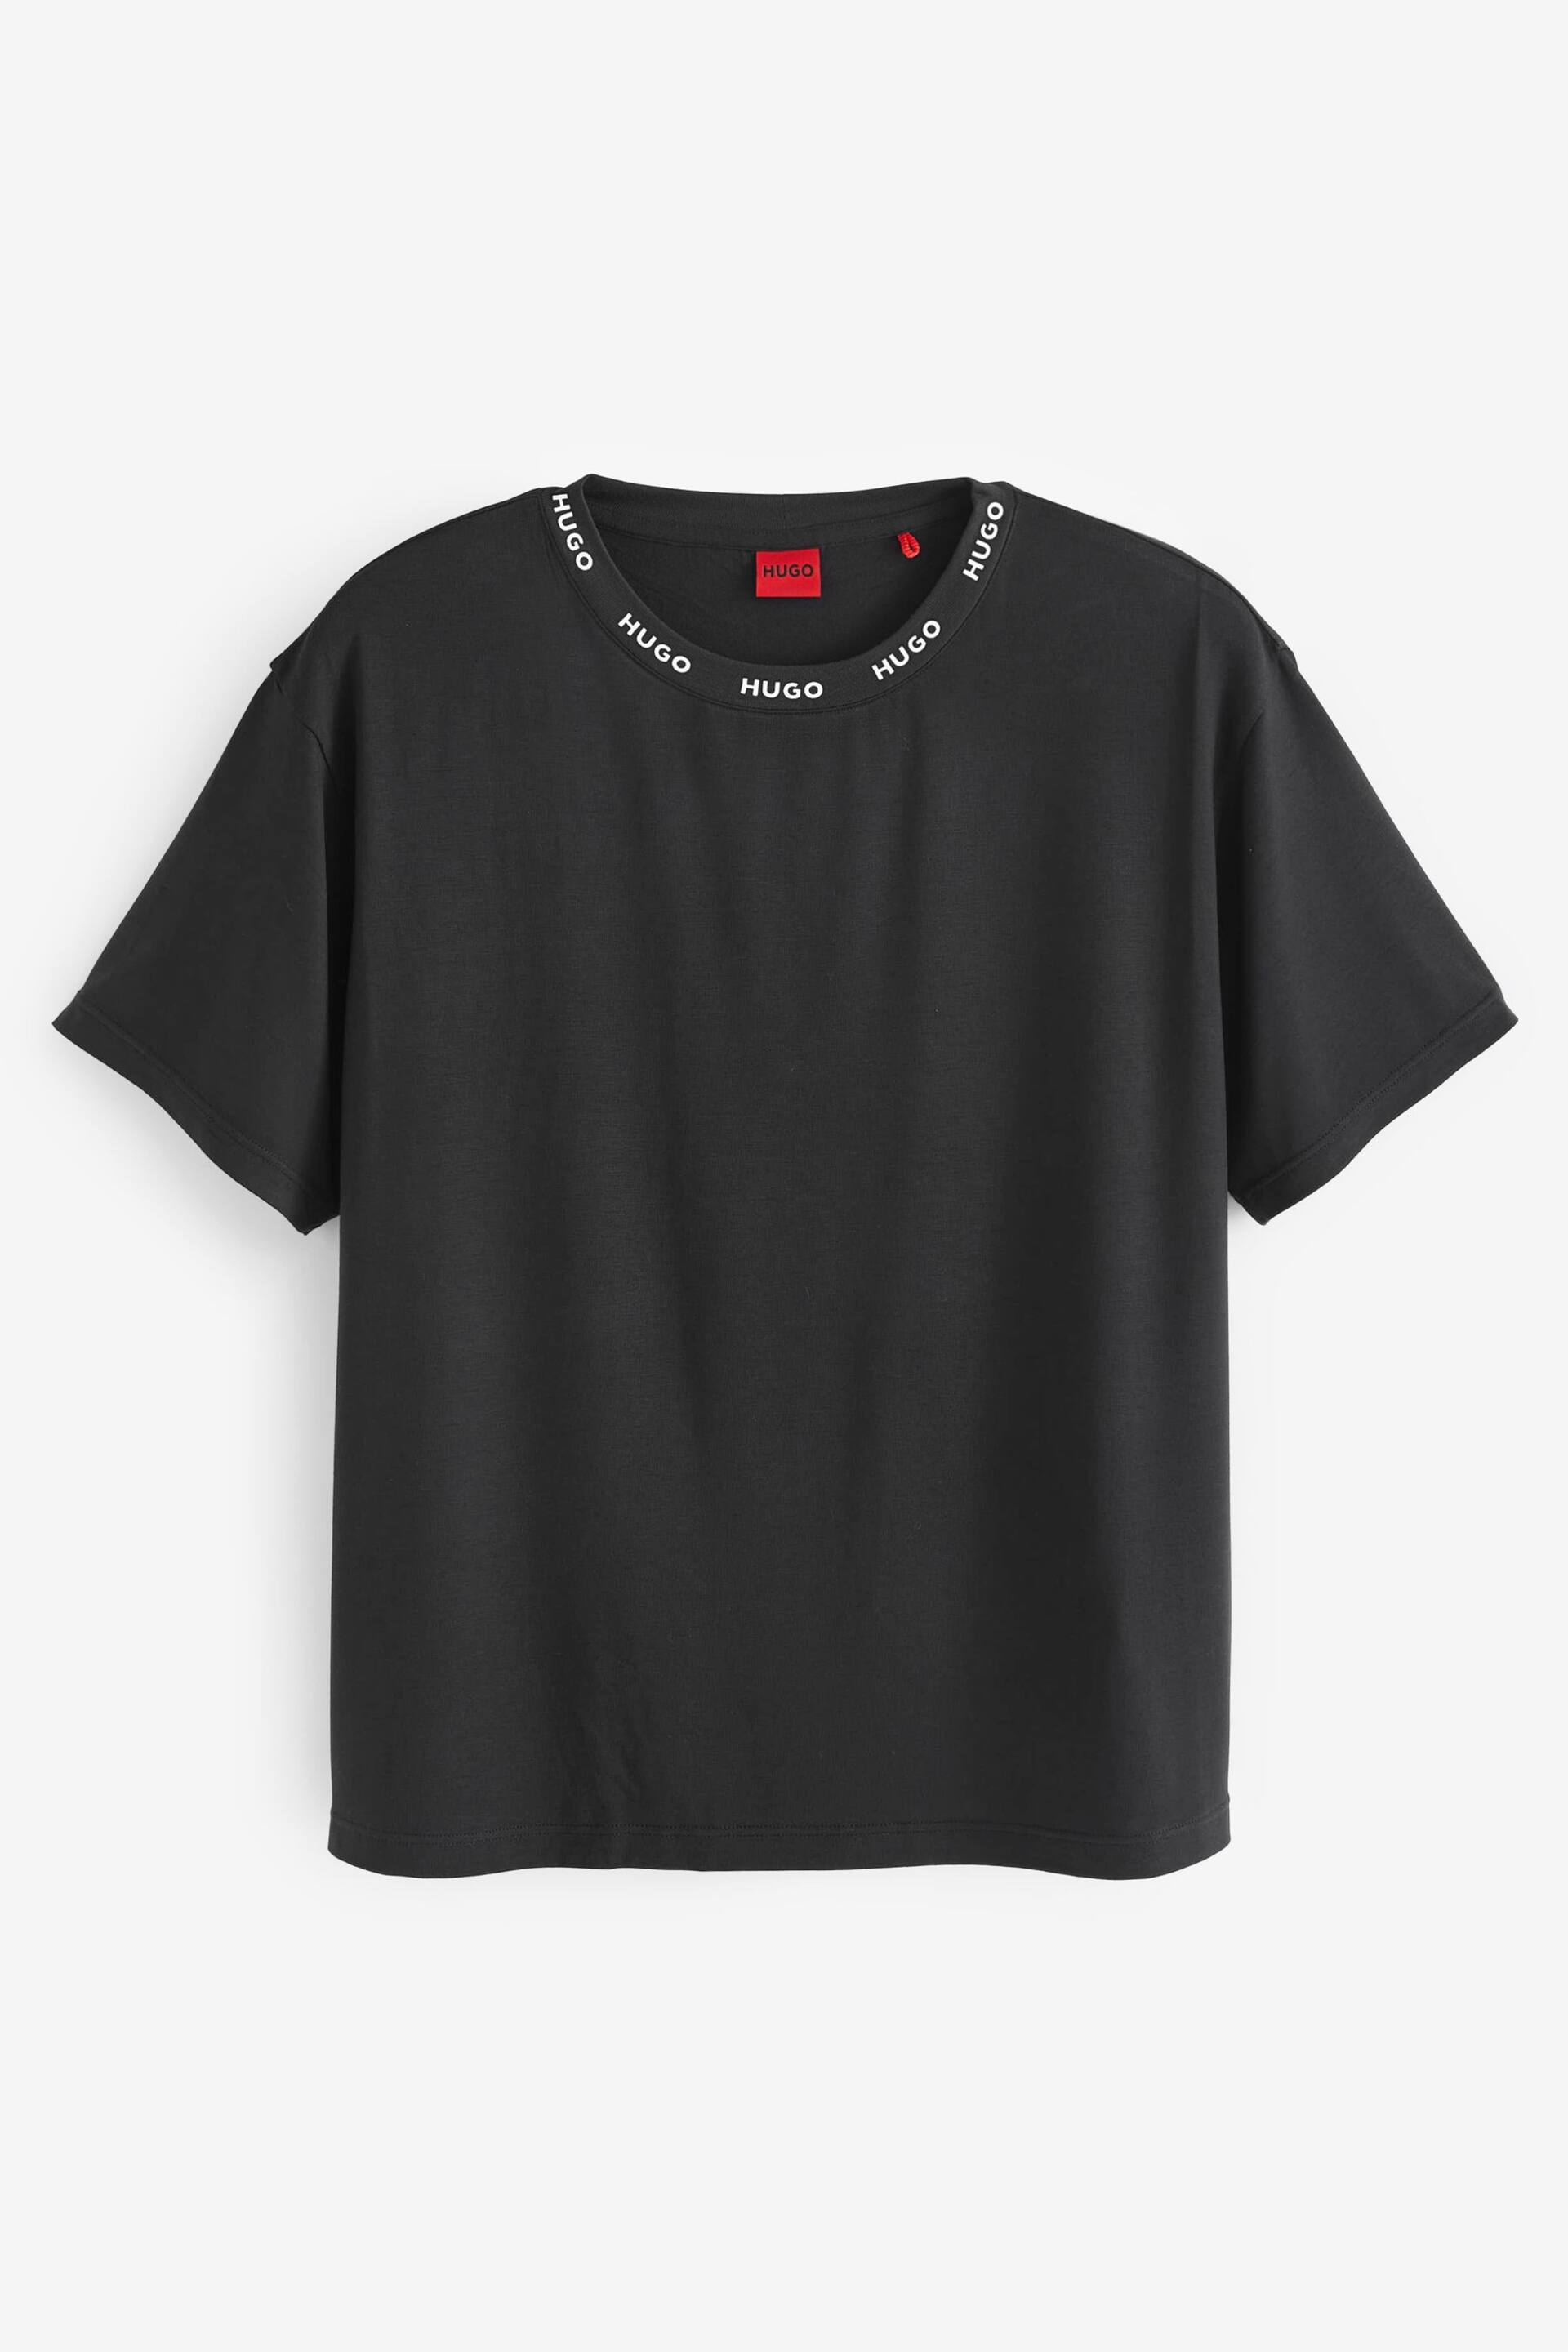 HUGO Stretch Jersey Black Pyjamas With Contrast Logo Details - Image 5 of 6